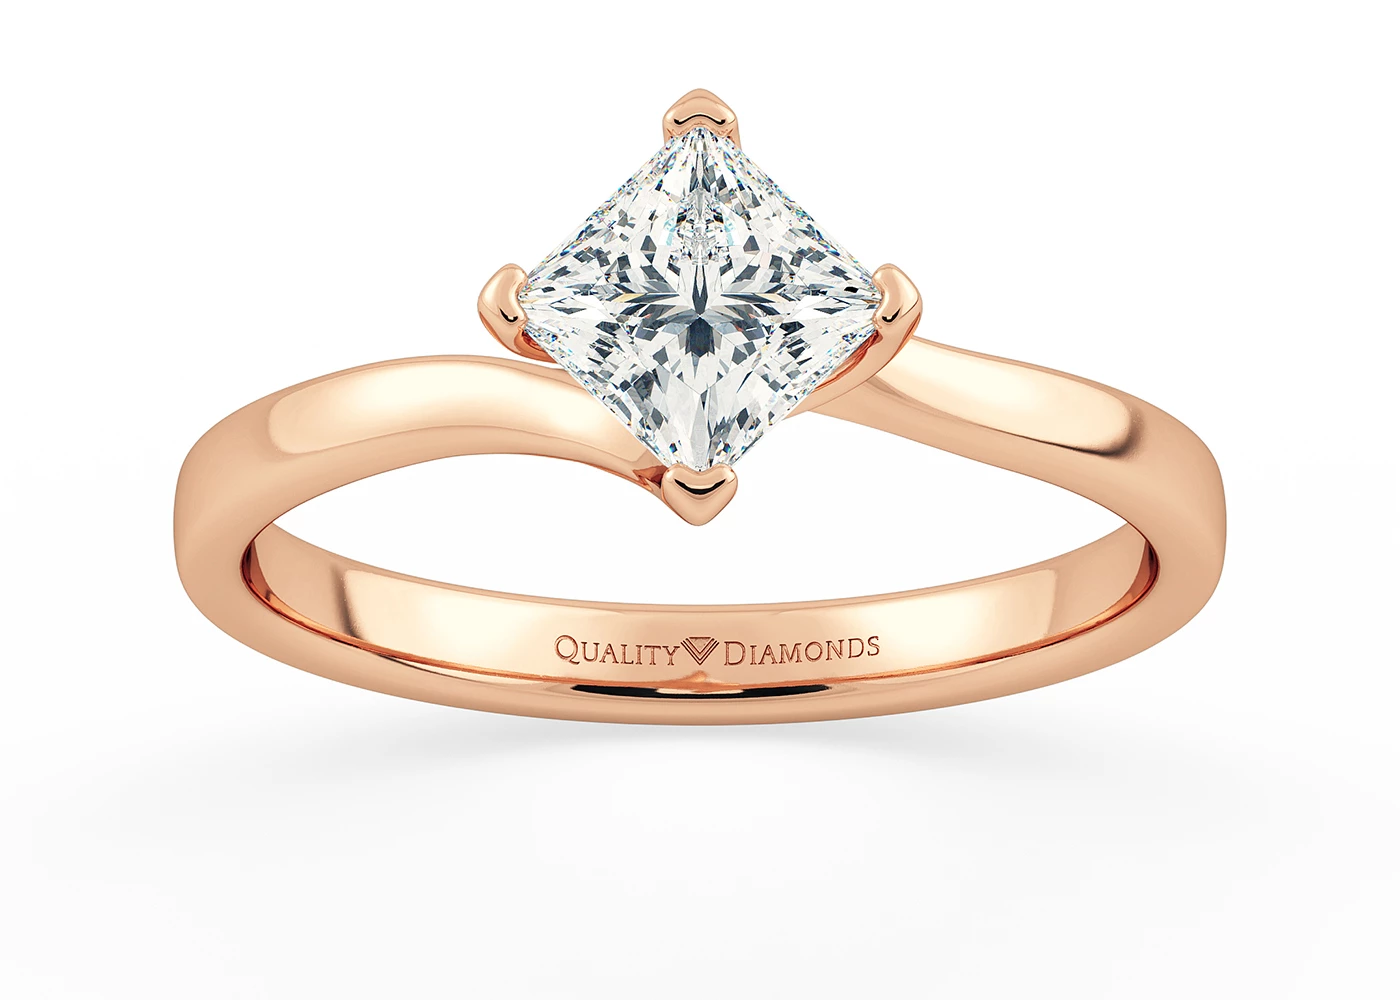 Princess Cura Diamond Ring in 9K Rose Gold